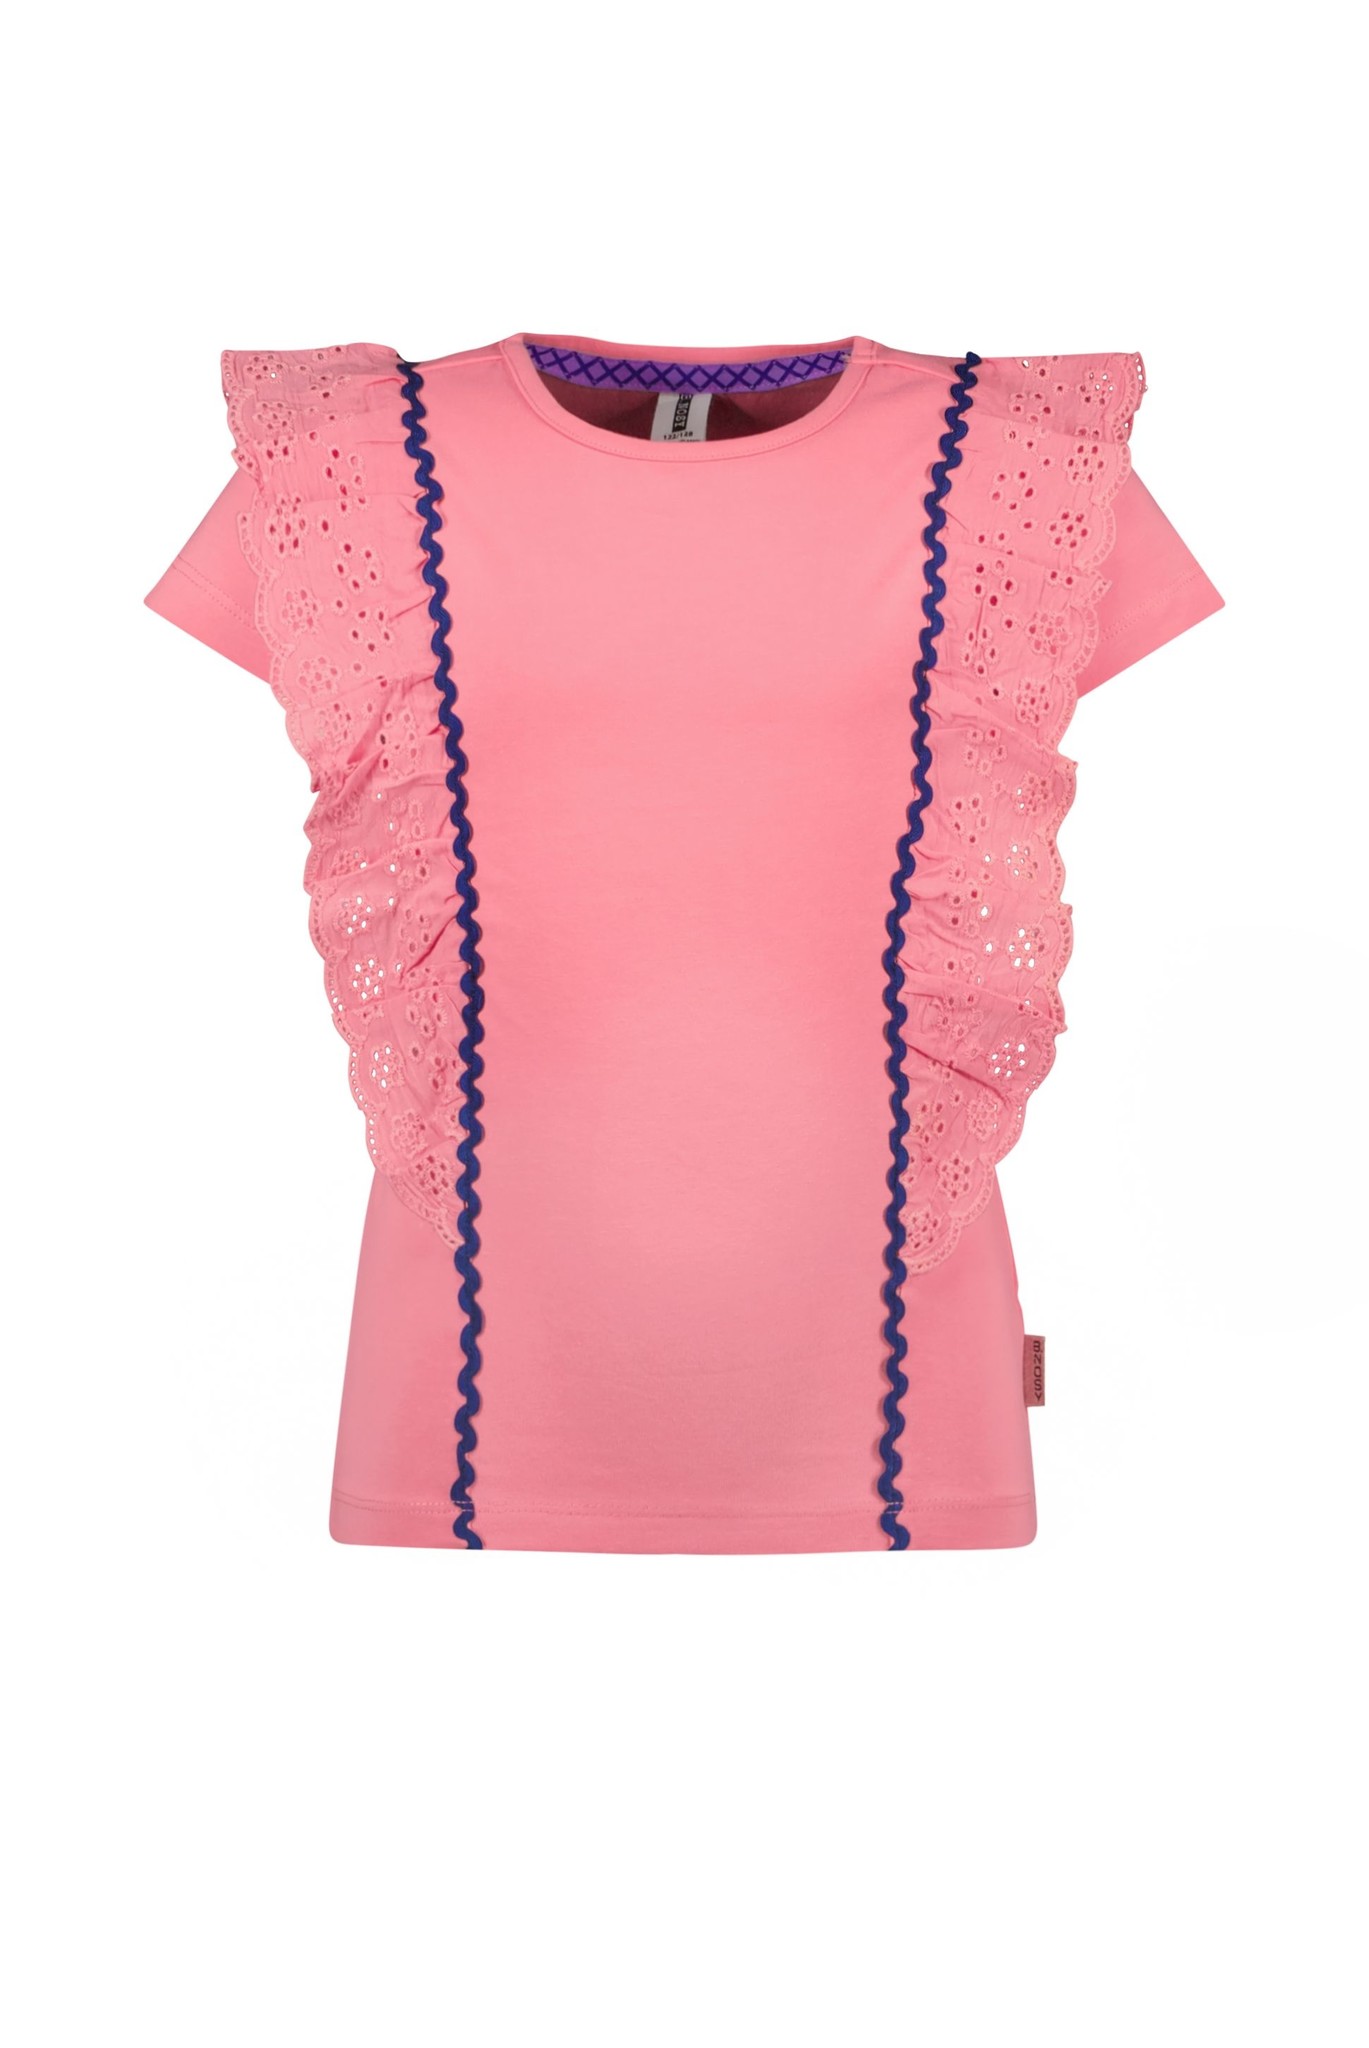 B.Nosy Meisjes t-shirt met ruffel - Geranium roze